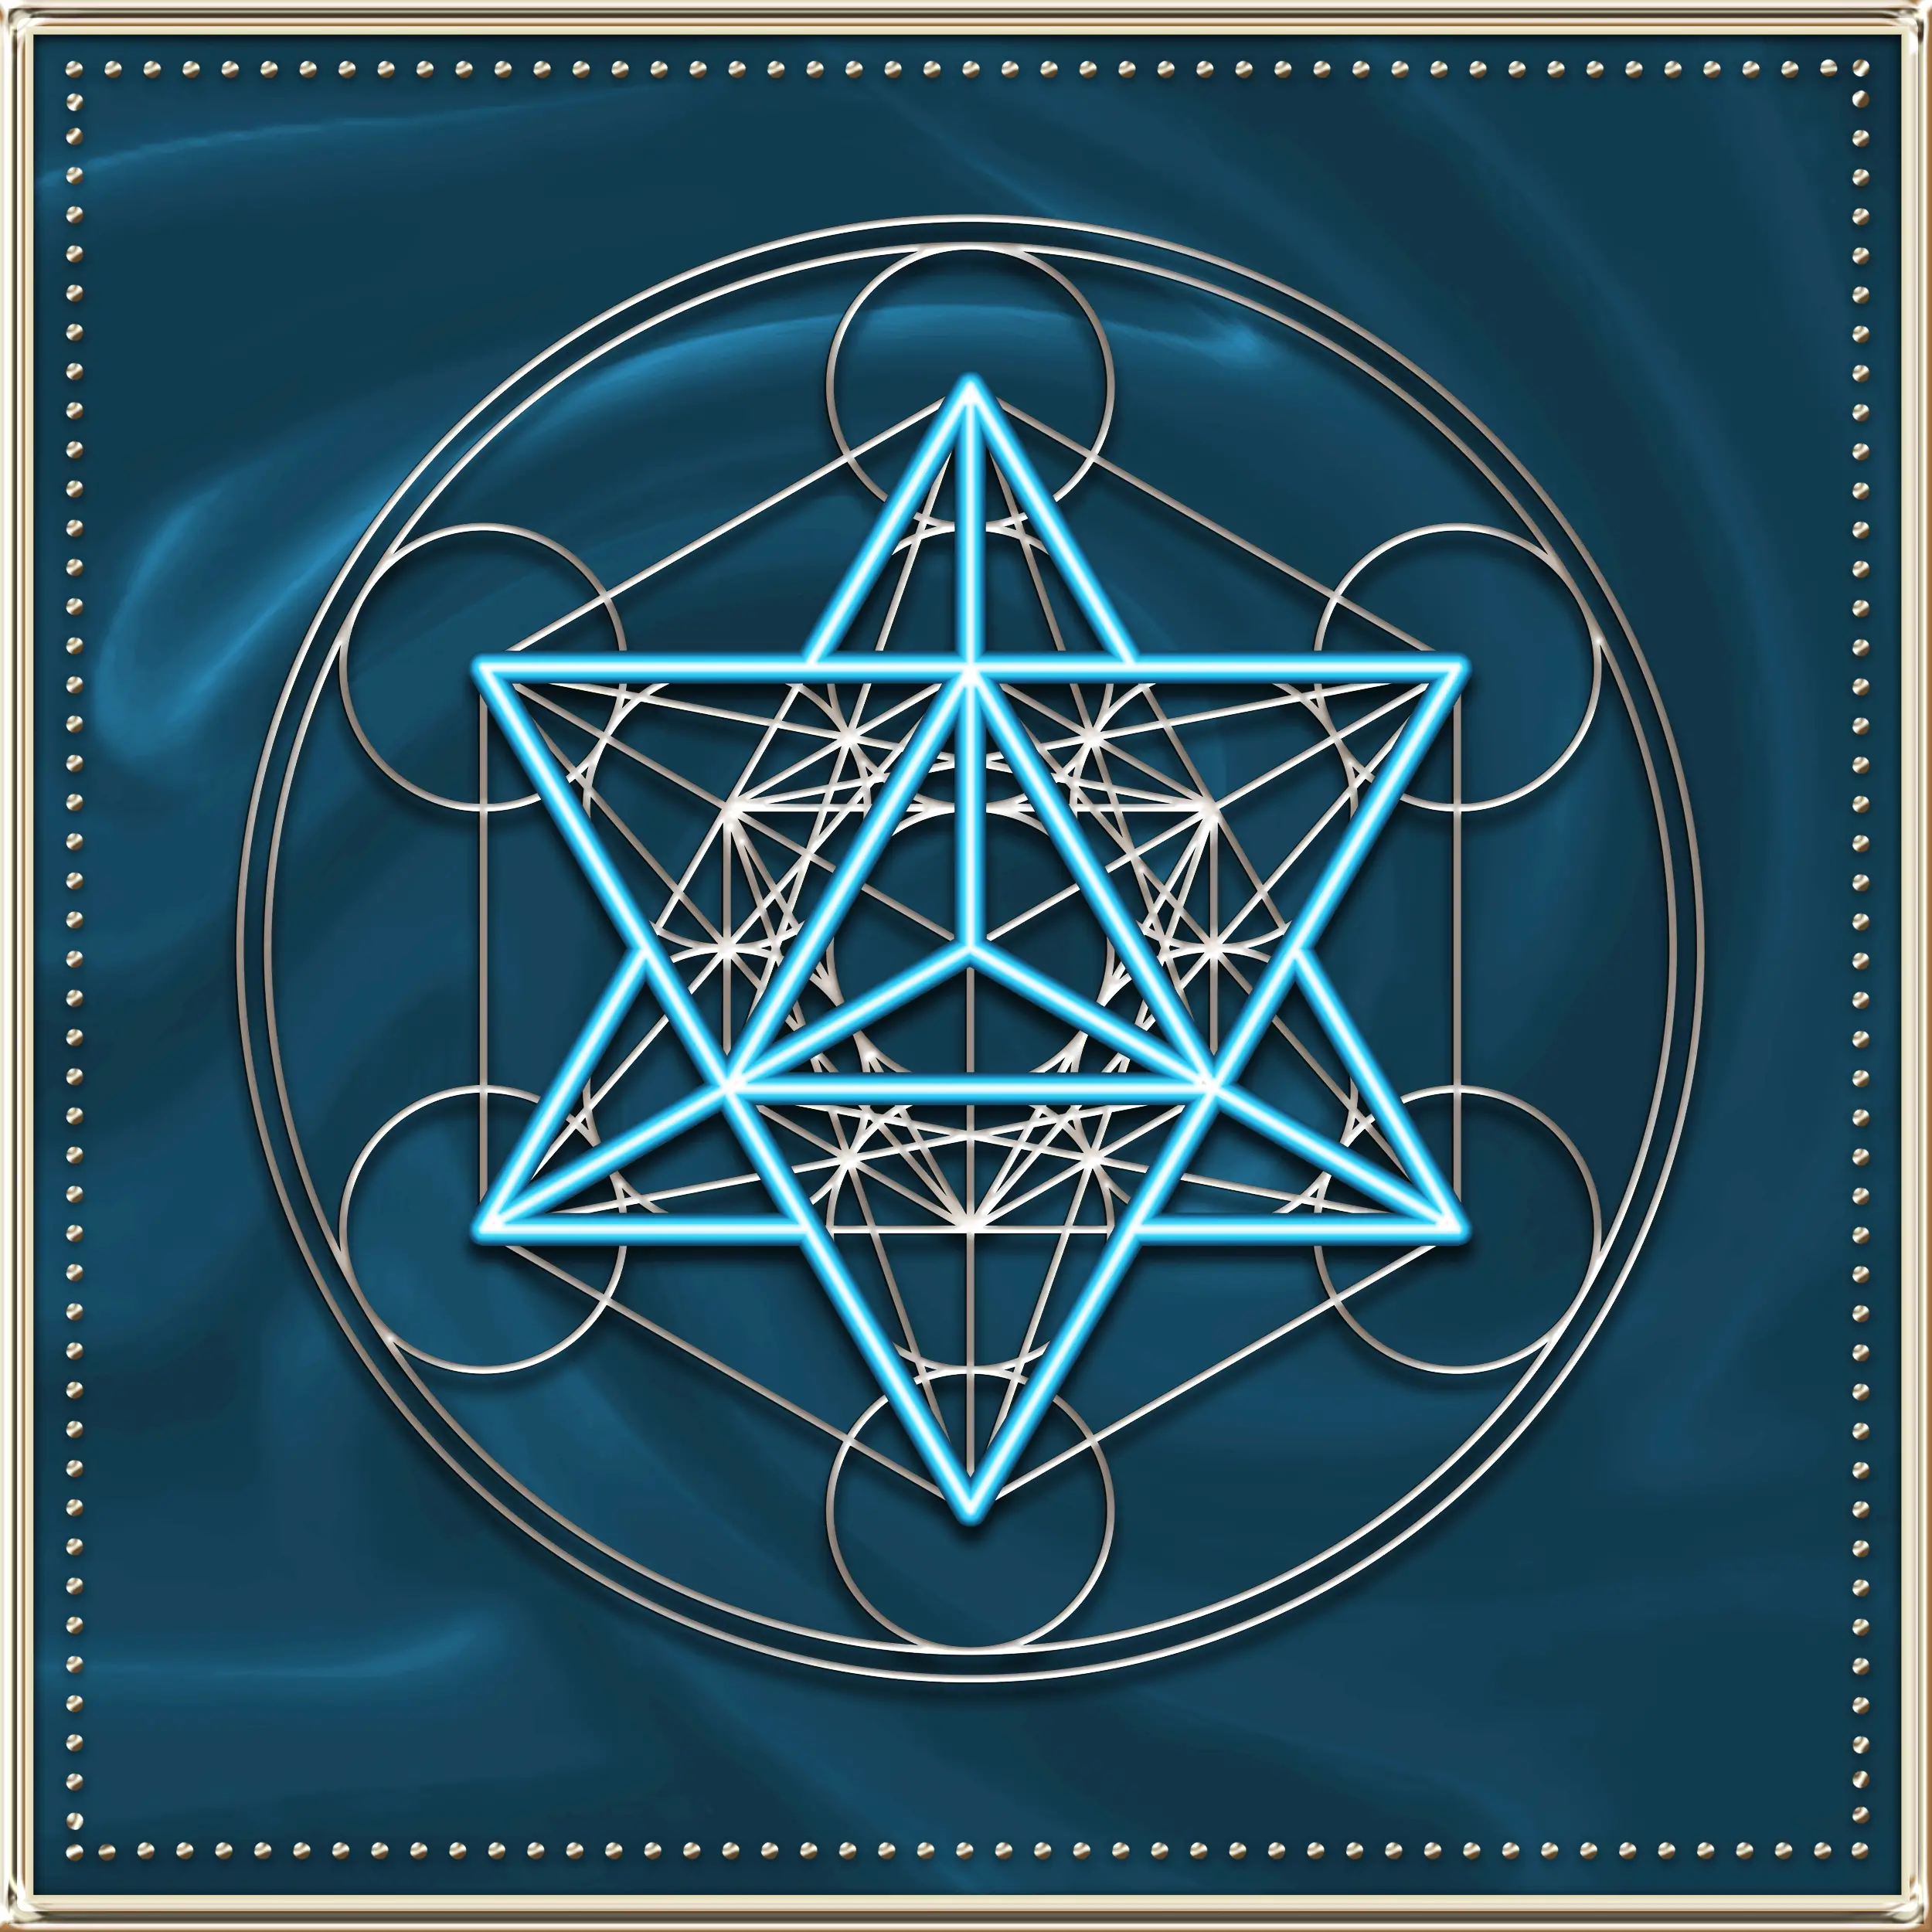 Merkaba - star tetrahedron - Metatrons cube